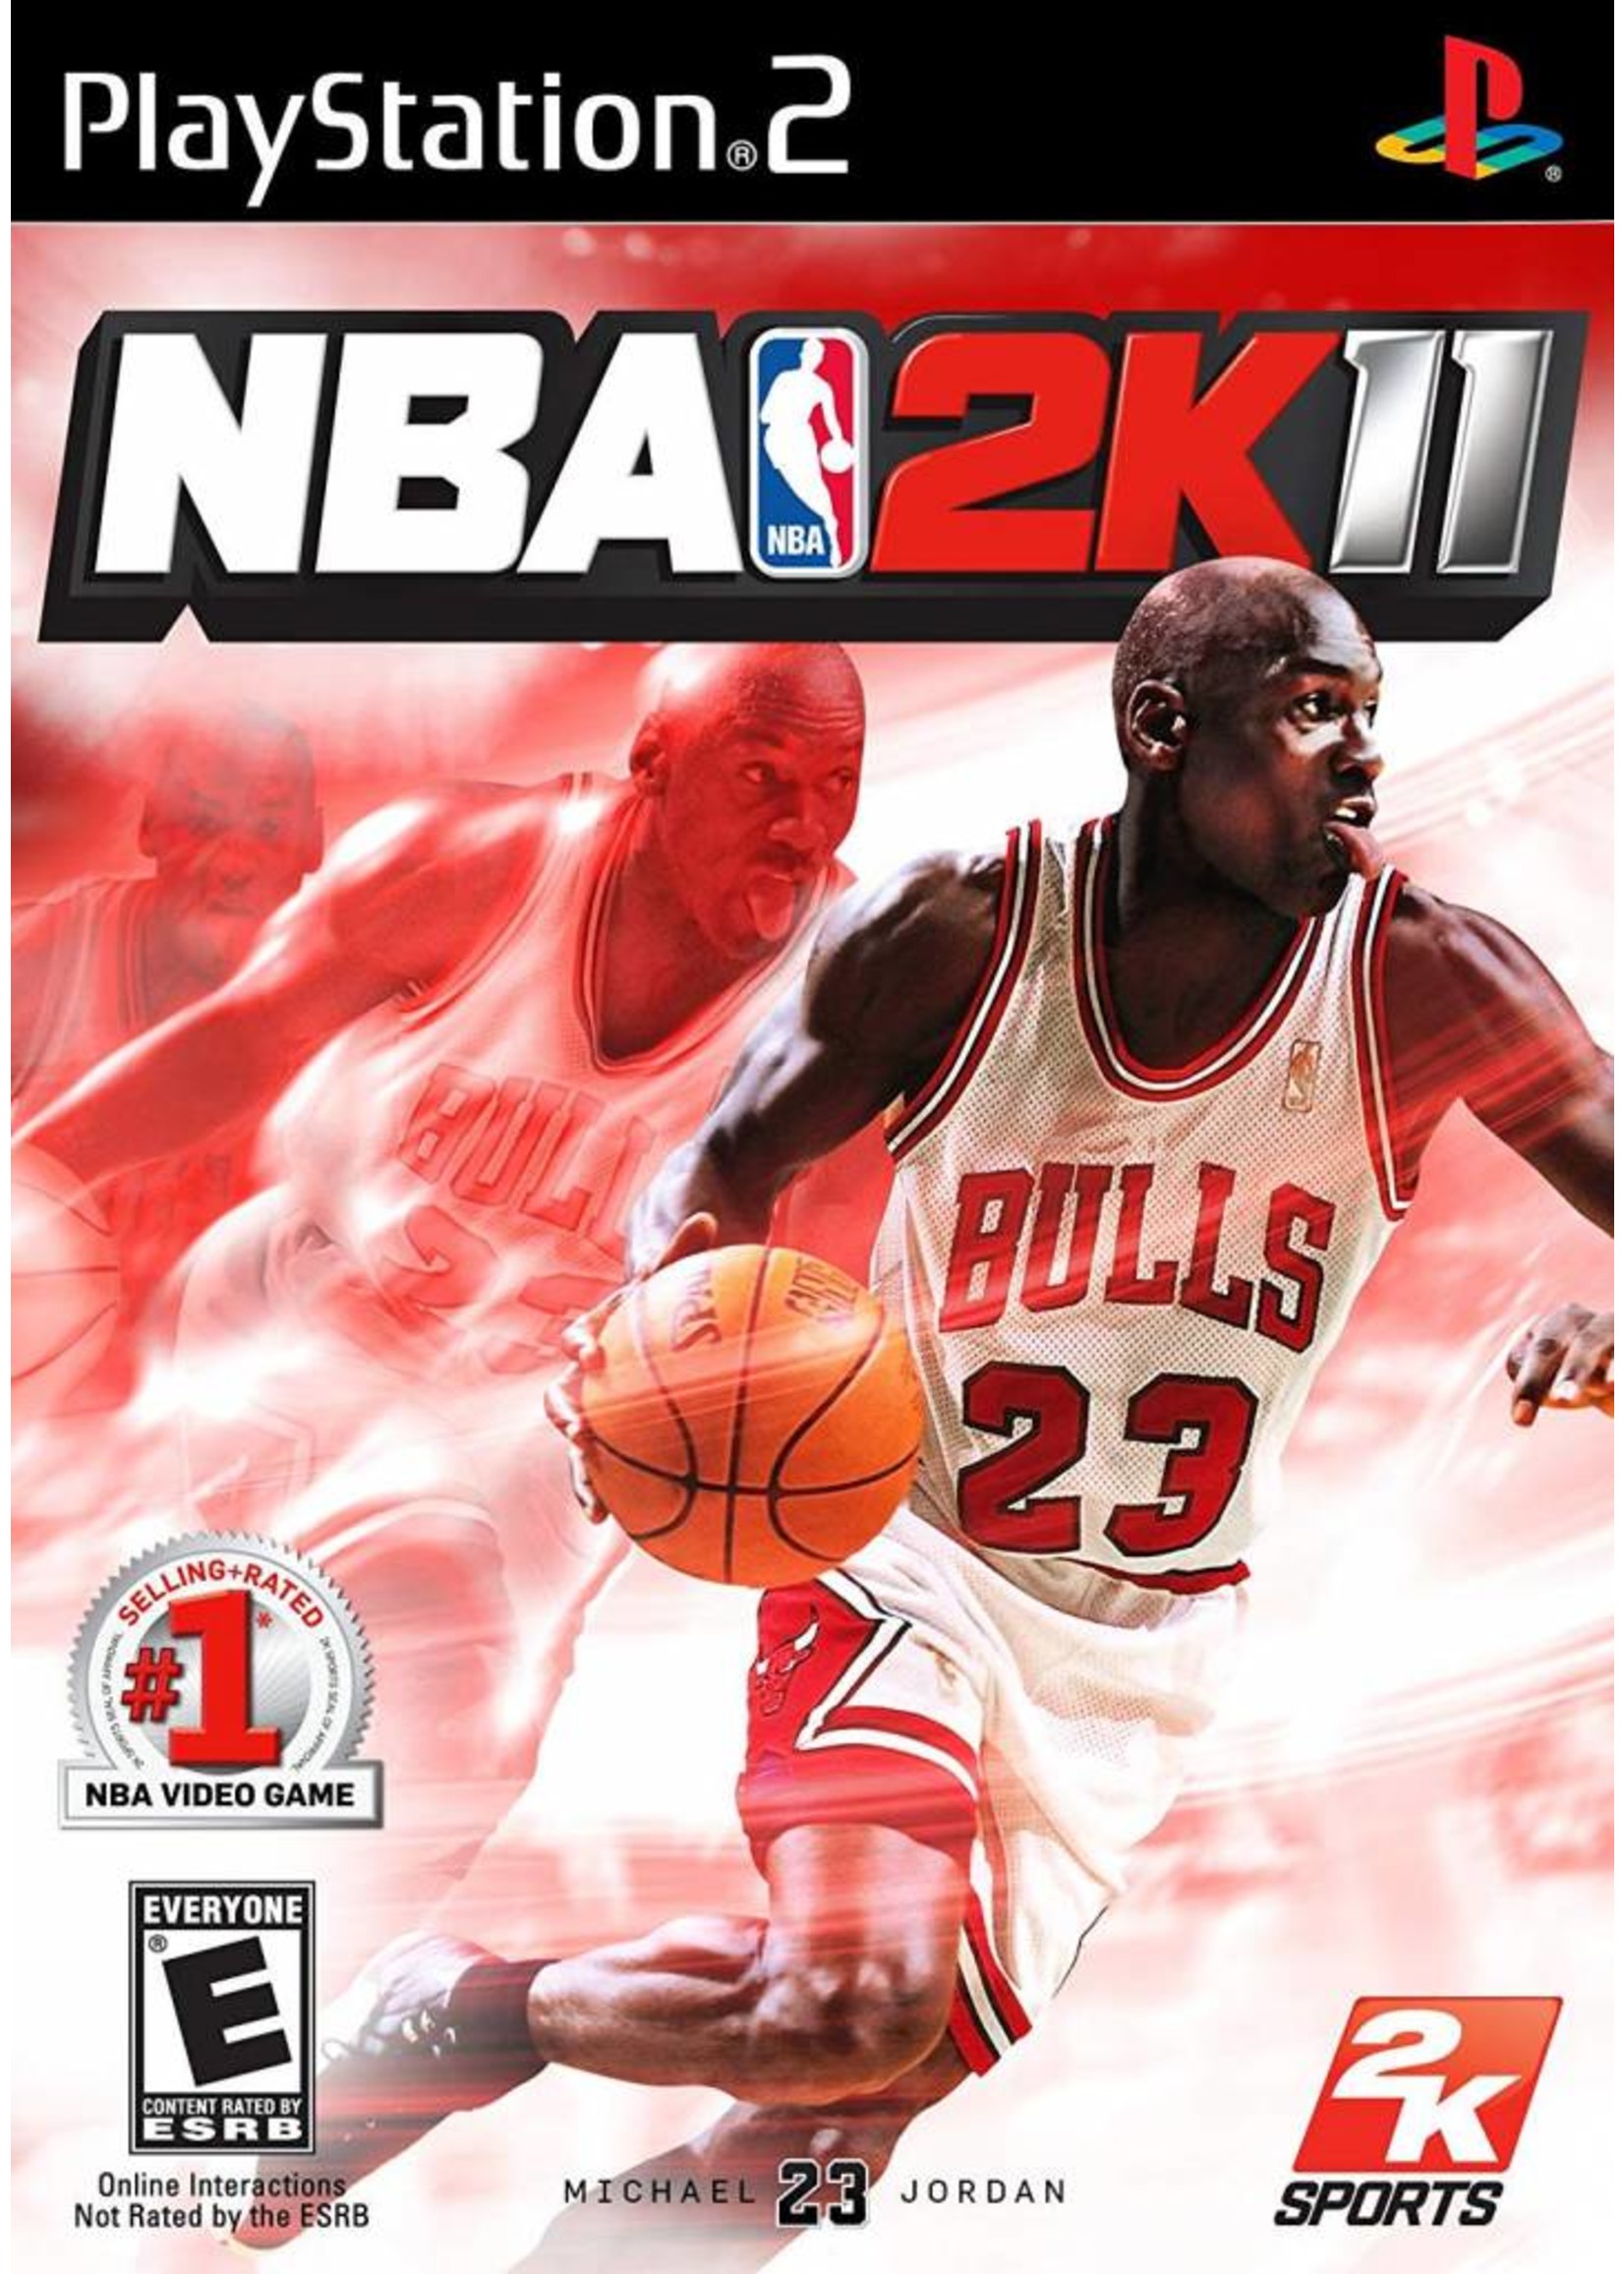 NBA 2K11 - PS2 PrePlayed